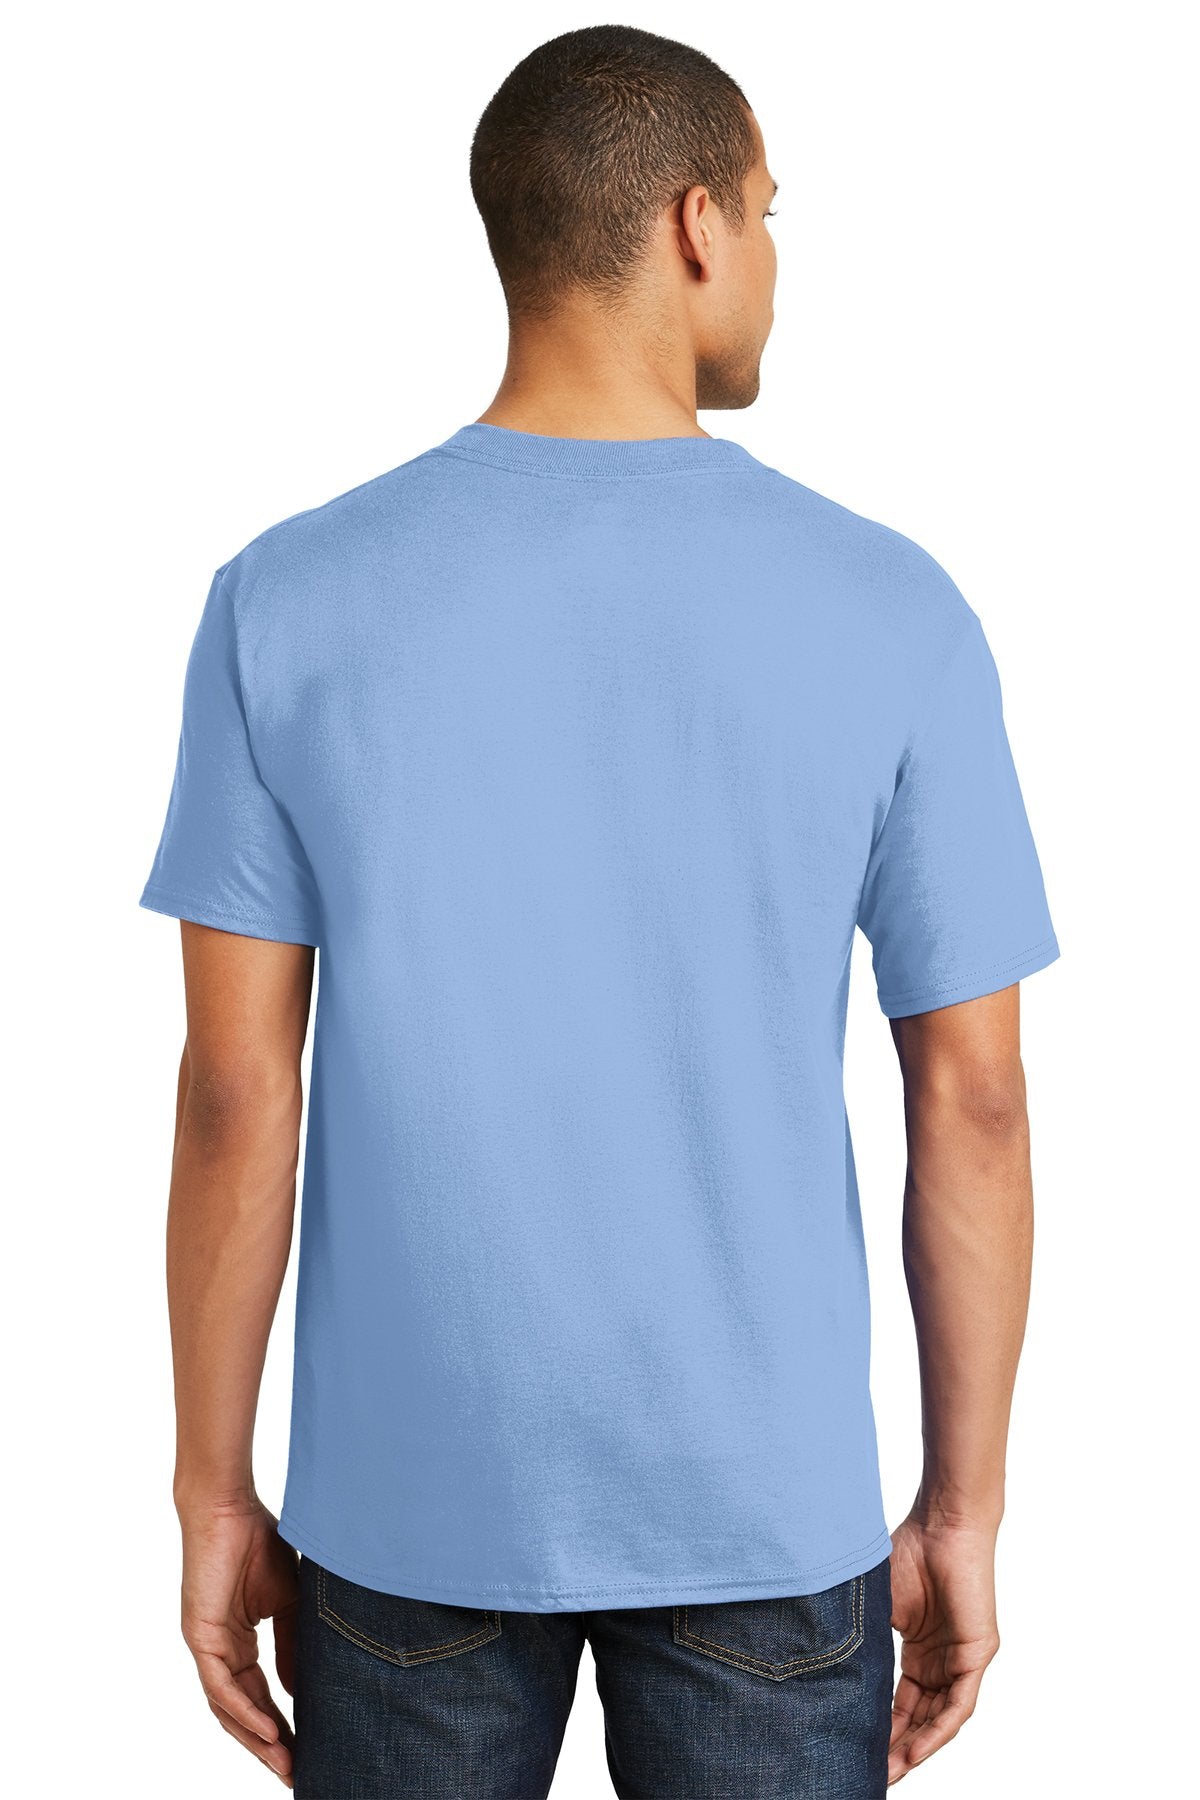 hanes beefy cotton t shirt 5180 light blue